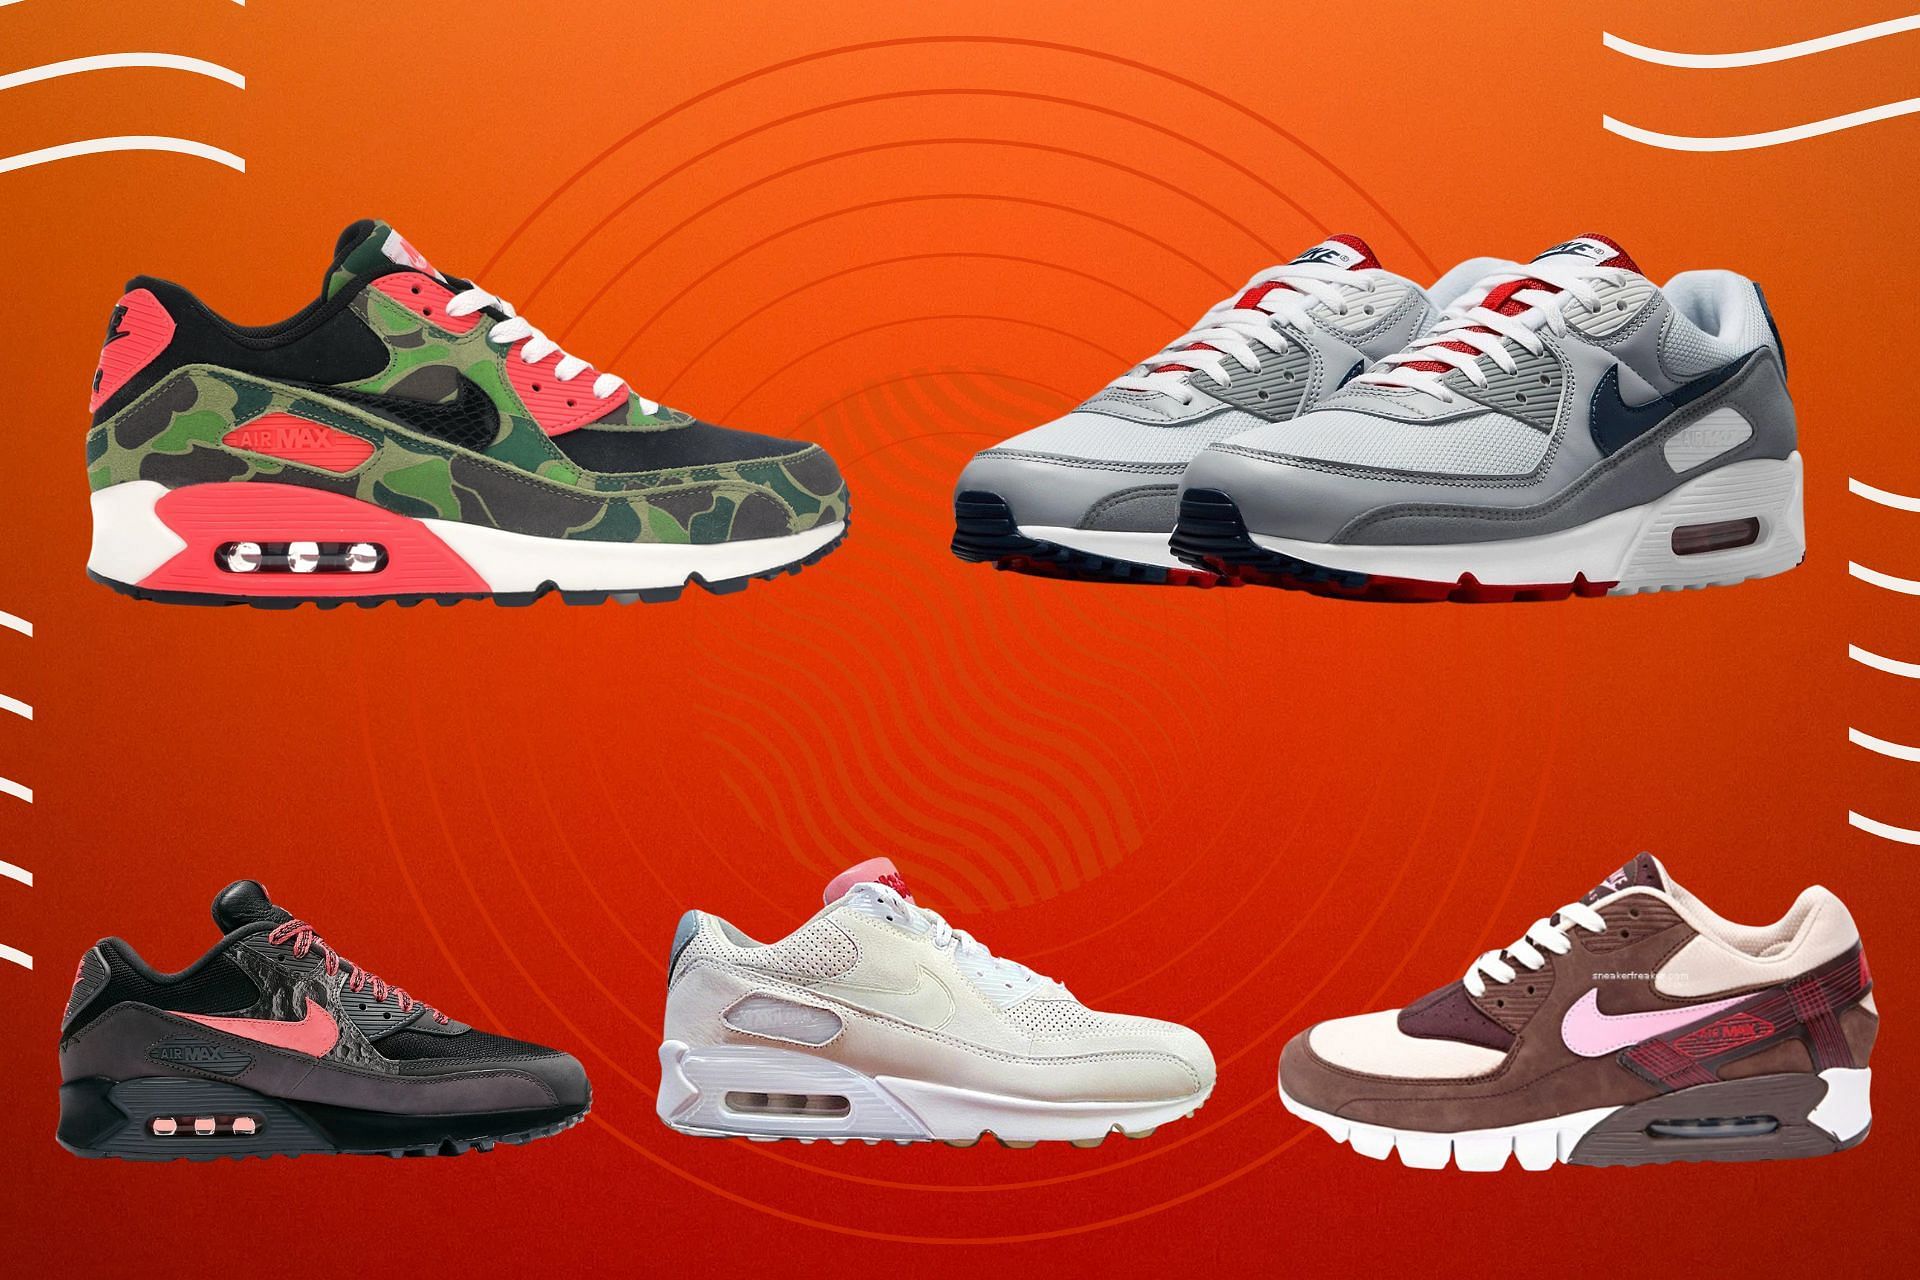 kleur Array verklaren 5 best Nike Air Max 90 sneakers of all time